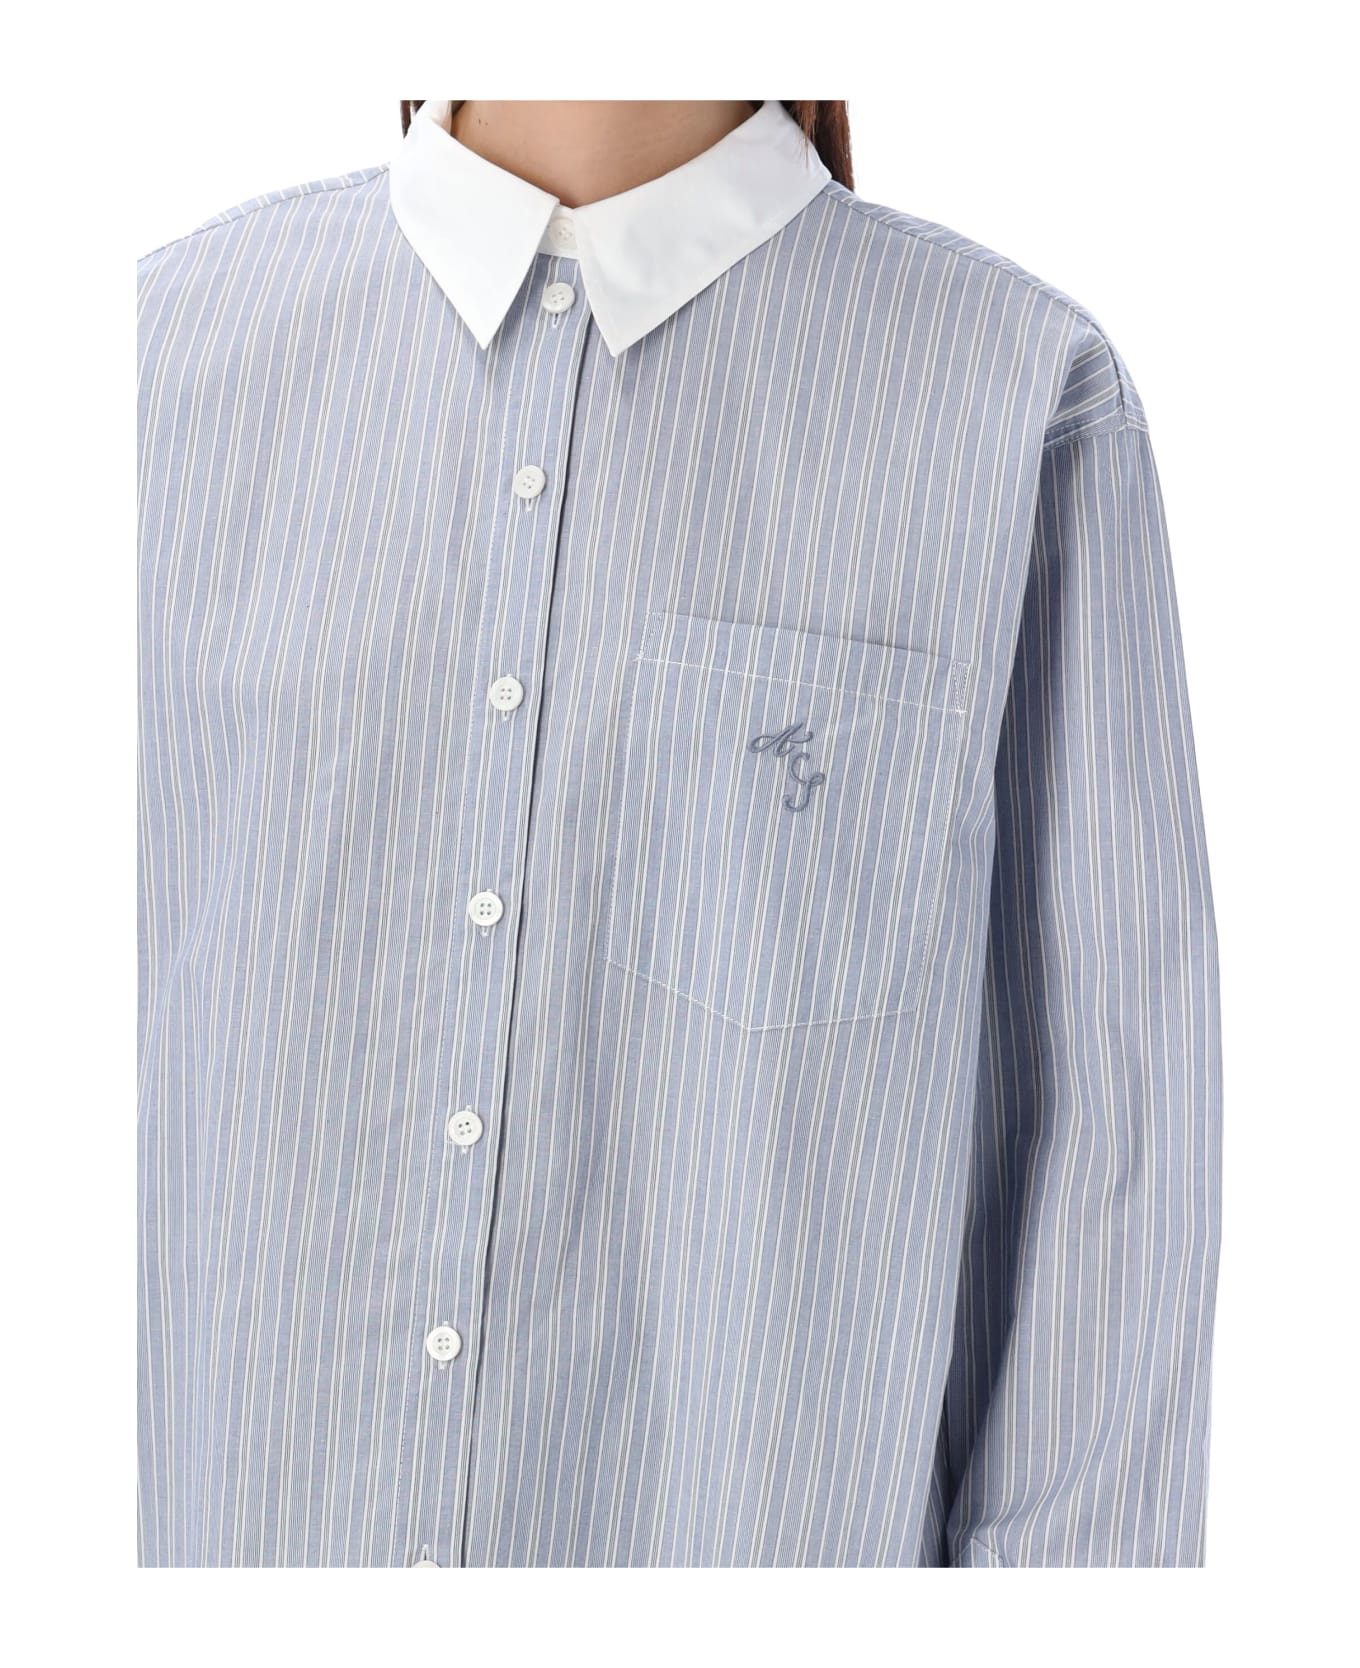 Acne Studios Stripe Shirt - BLUE WHITE STIPE シャツ